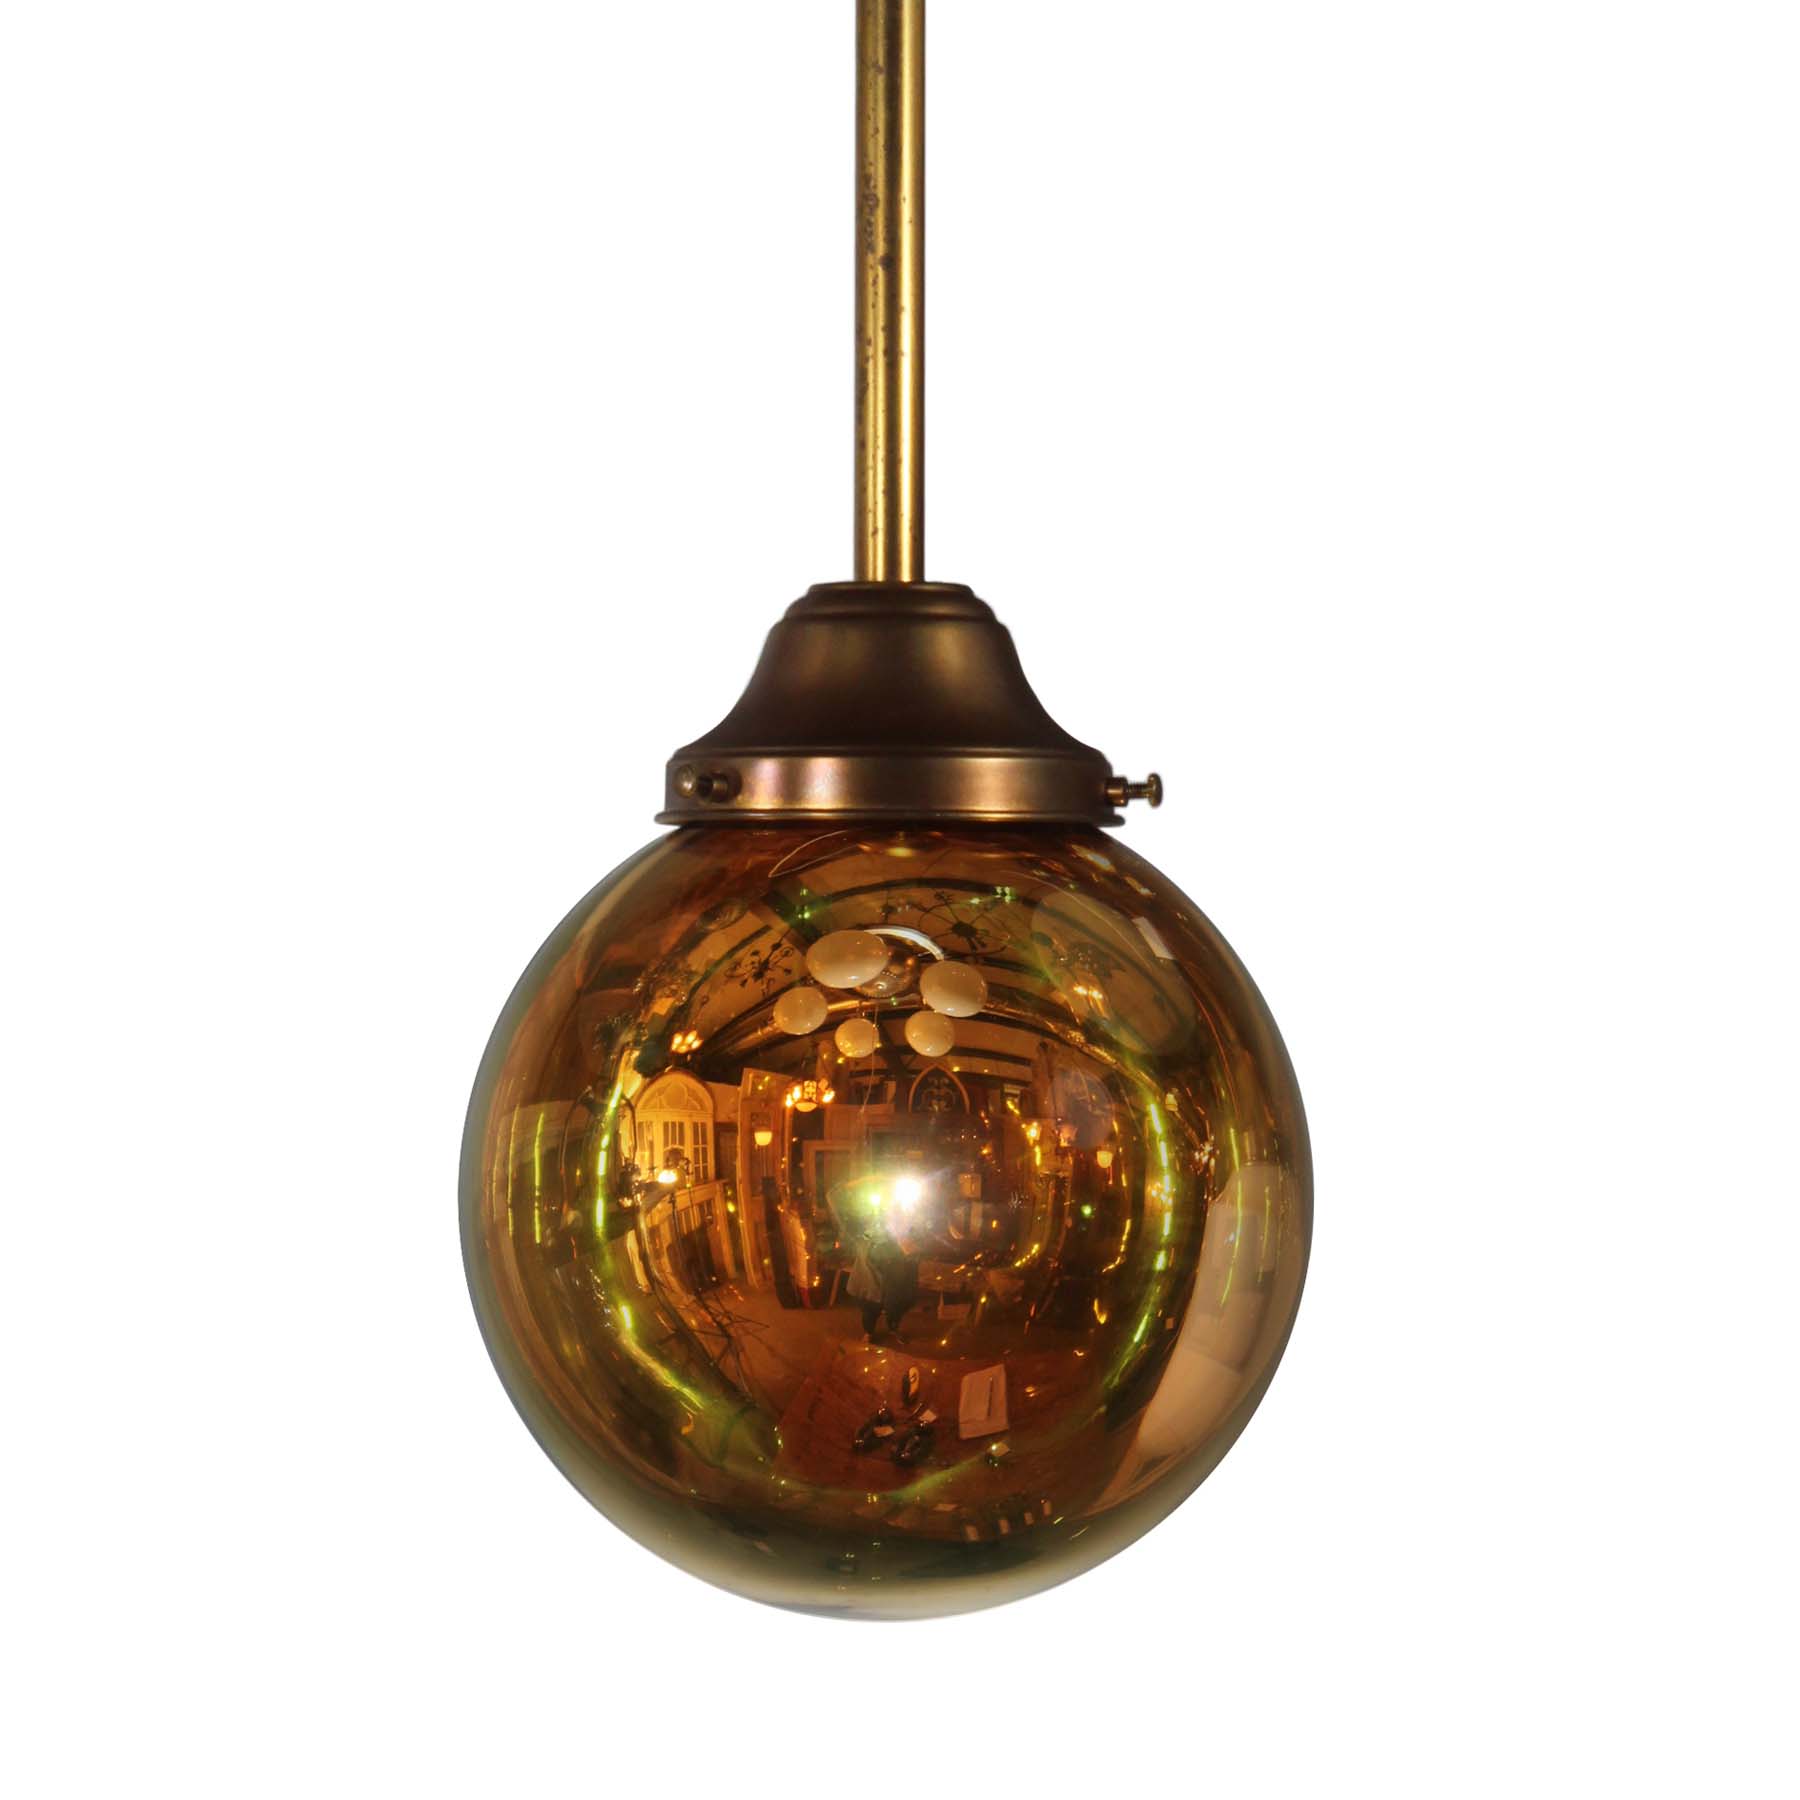 SOLD Mirrored Glass Ball Pendant Lights, Vintage Lighting-69597